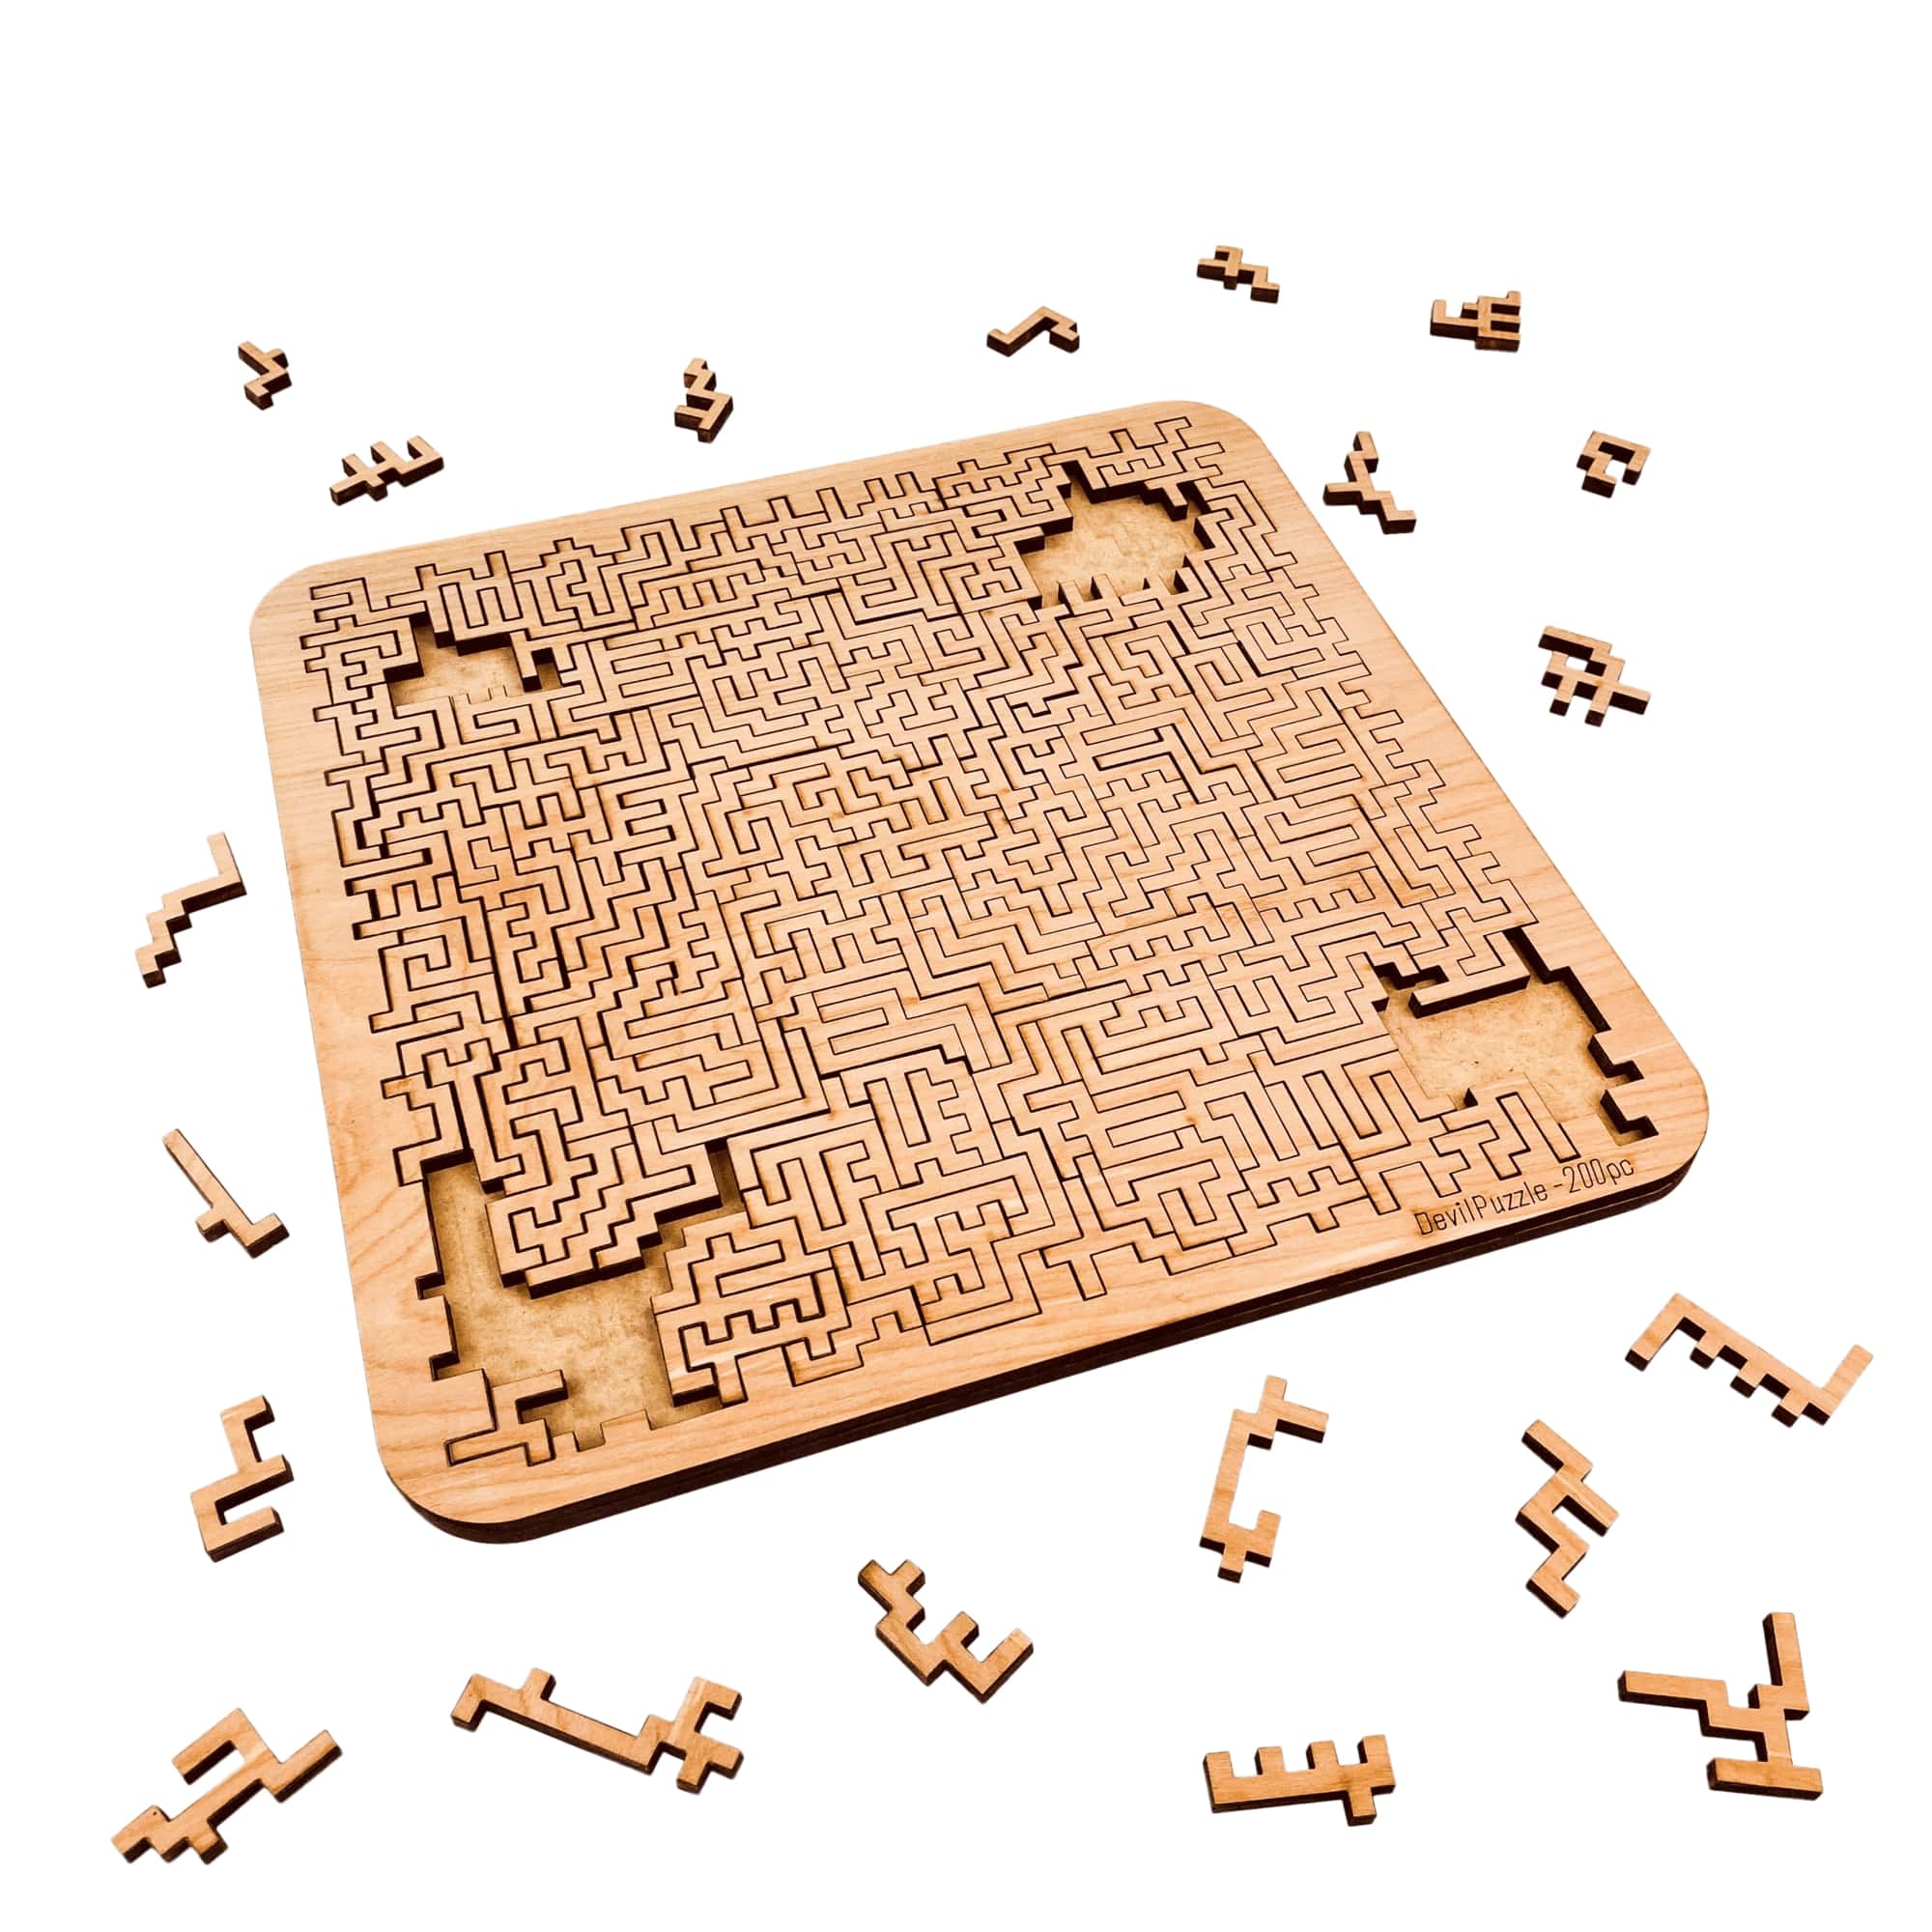 Torched Products Puzzle Medium (50 pieces) Mind Bending Aztec Labyrinth Puzzle